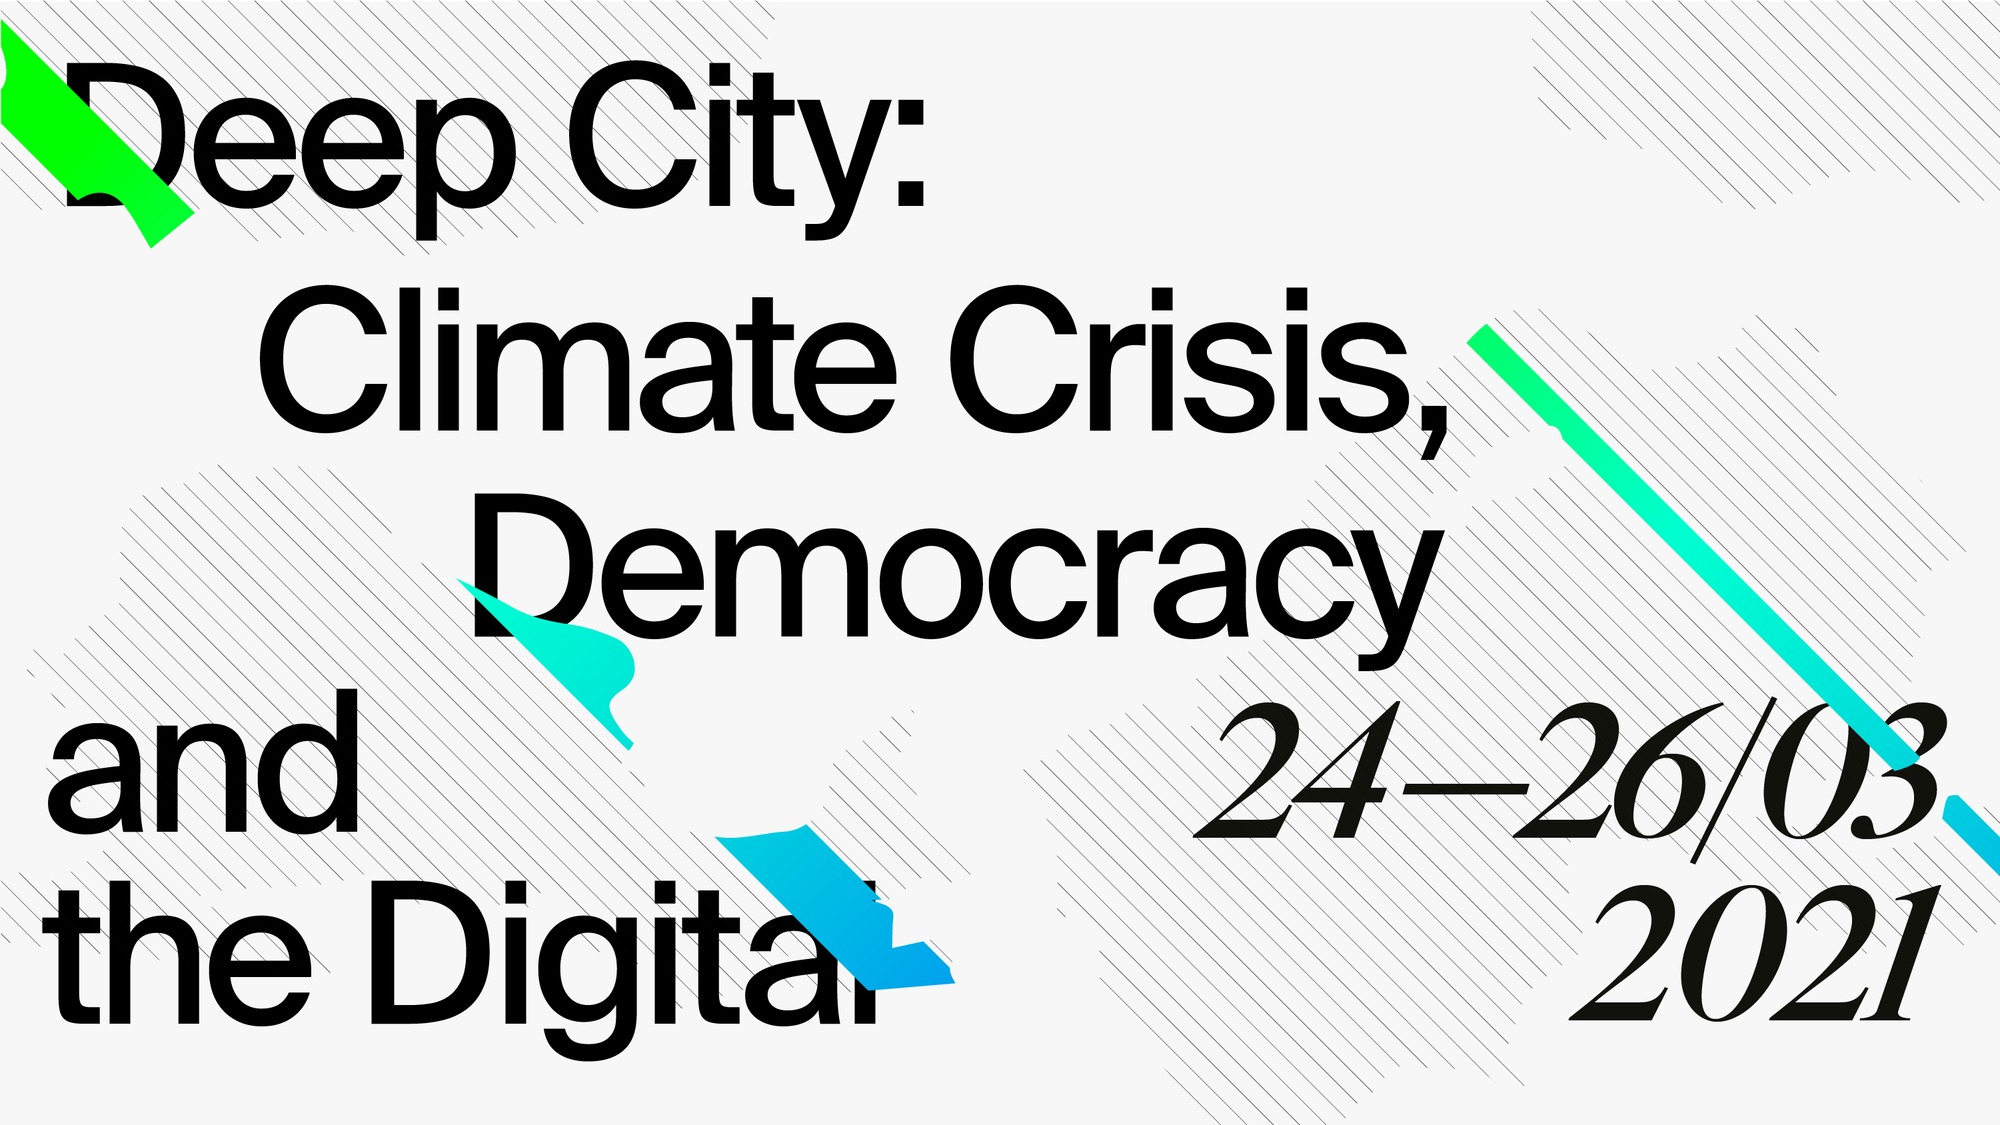 Synne Tollerud Bull vil presentere Bull.Miletics prosjekt Time to Reflect Reality på den internasjonale konferansen Deep City: Climate Crisis, Democracy and the Digital.